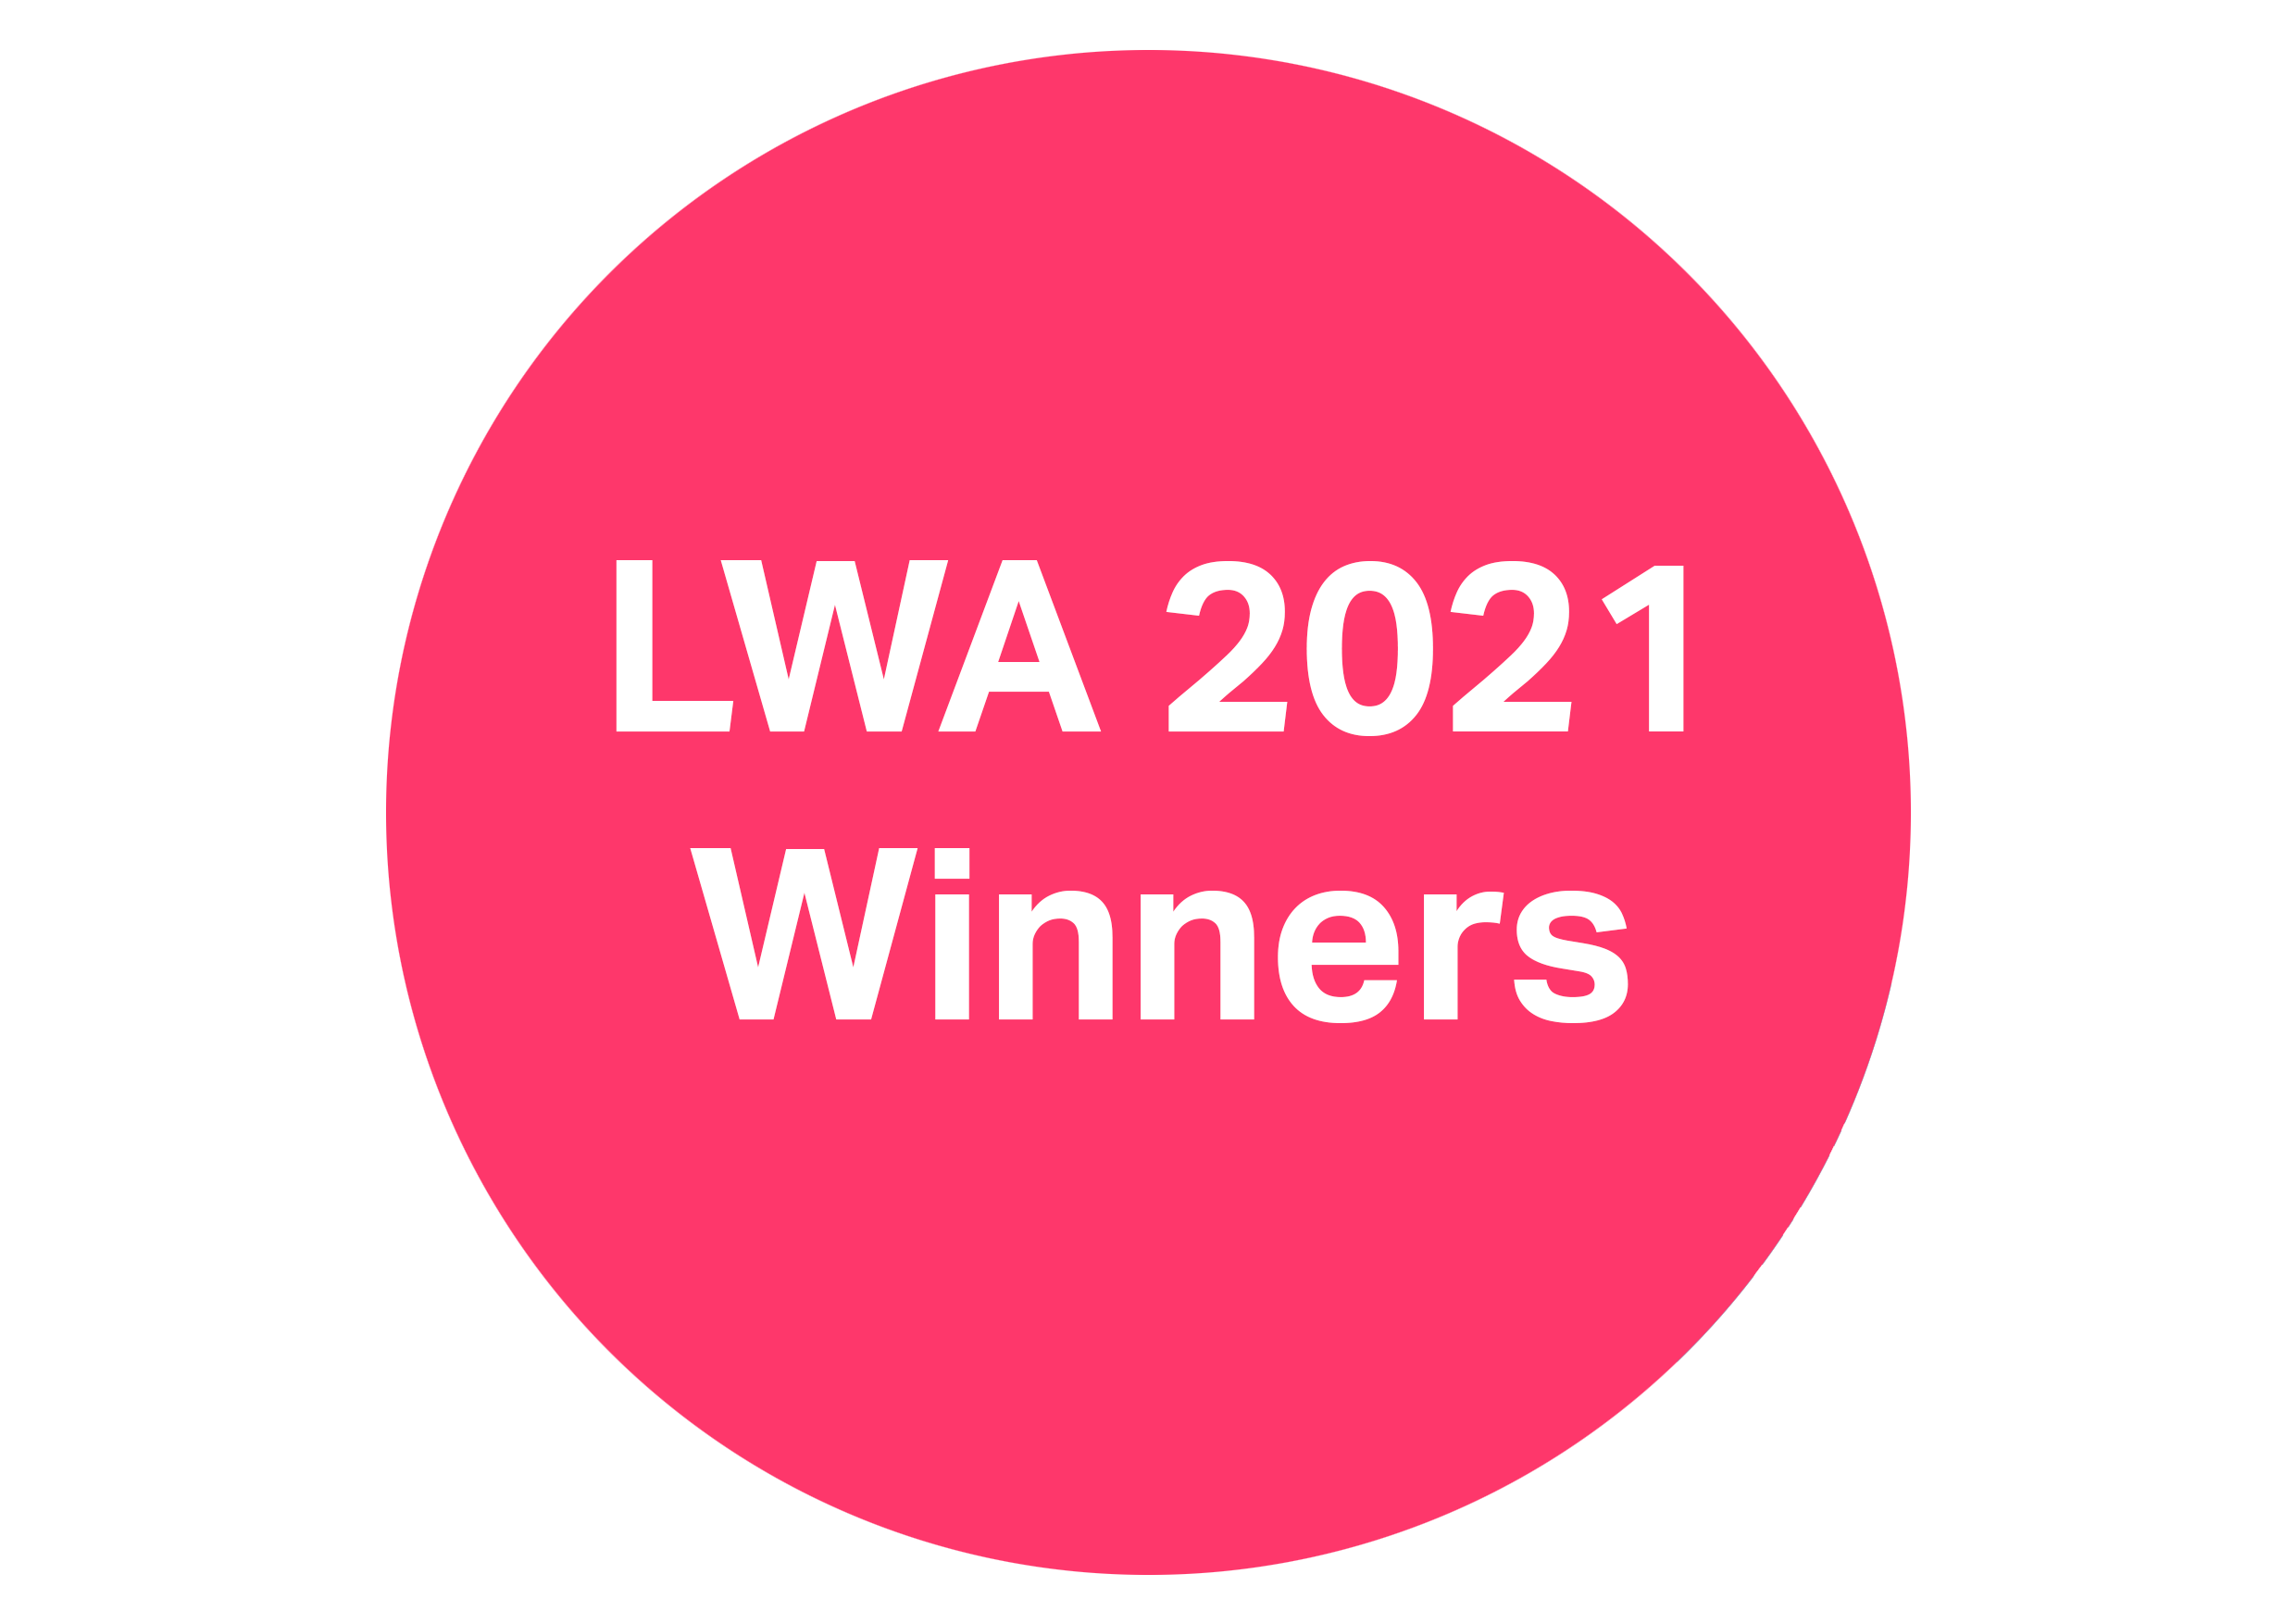 LWA Nominations winners 2021